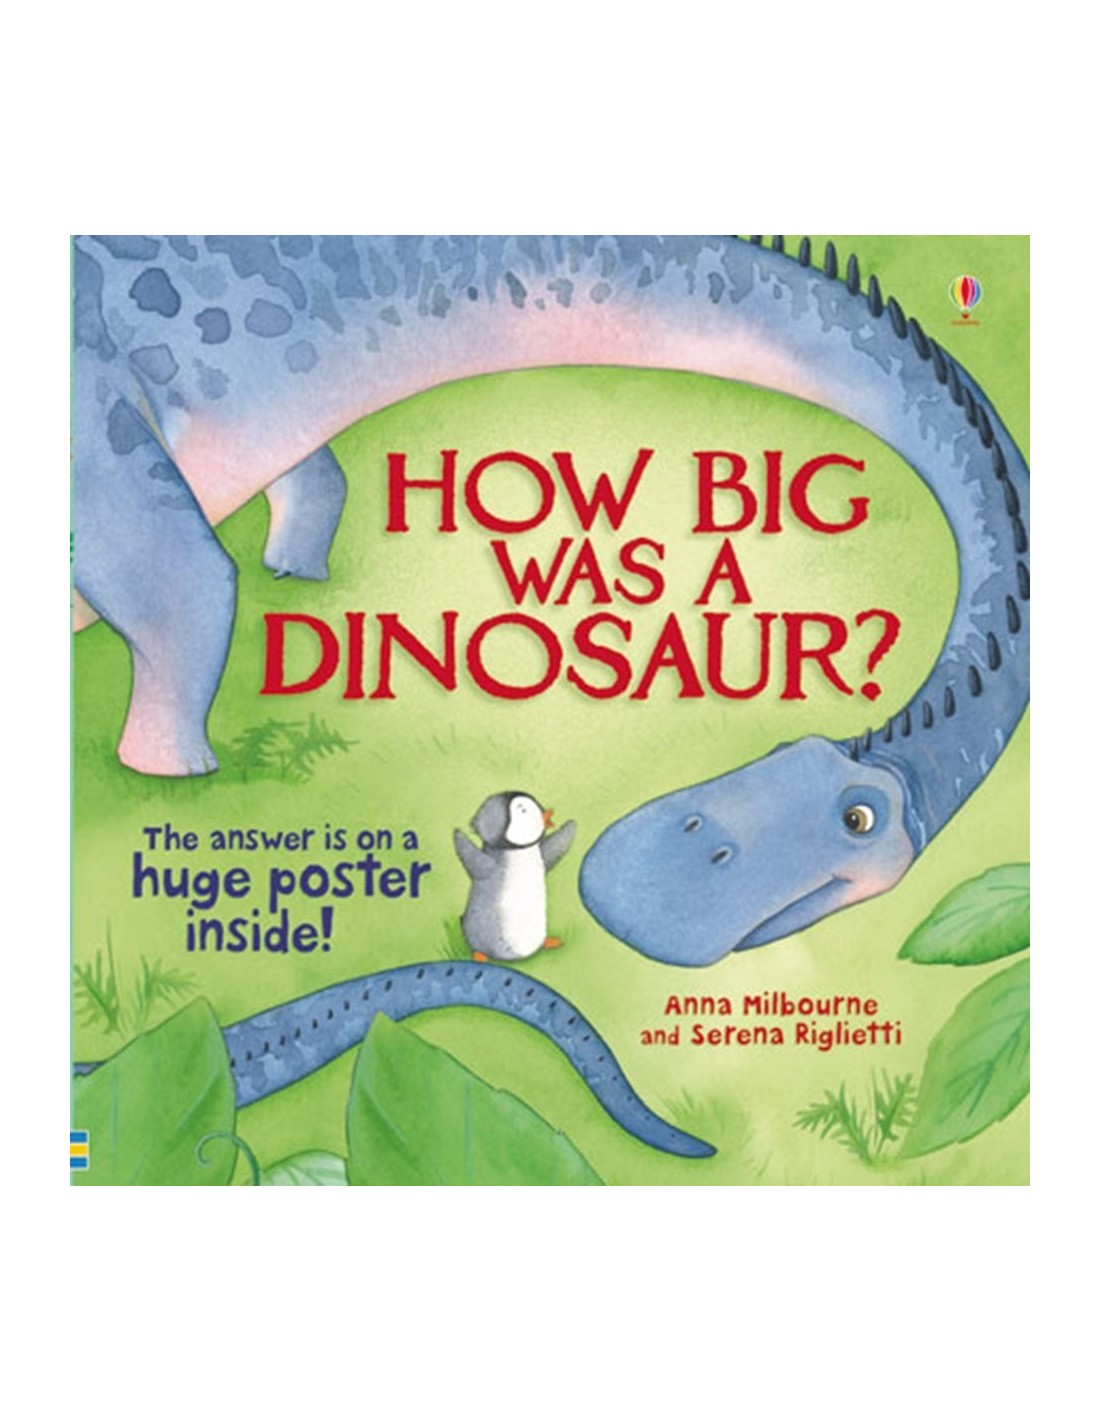 How big was a dinosaur?